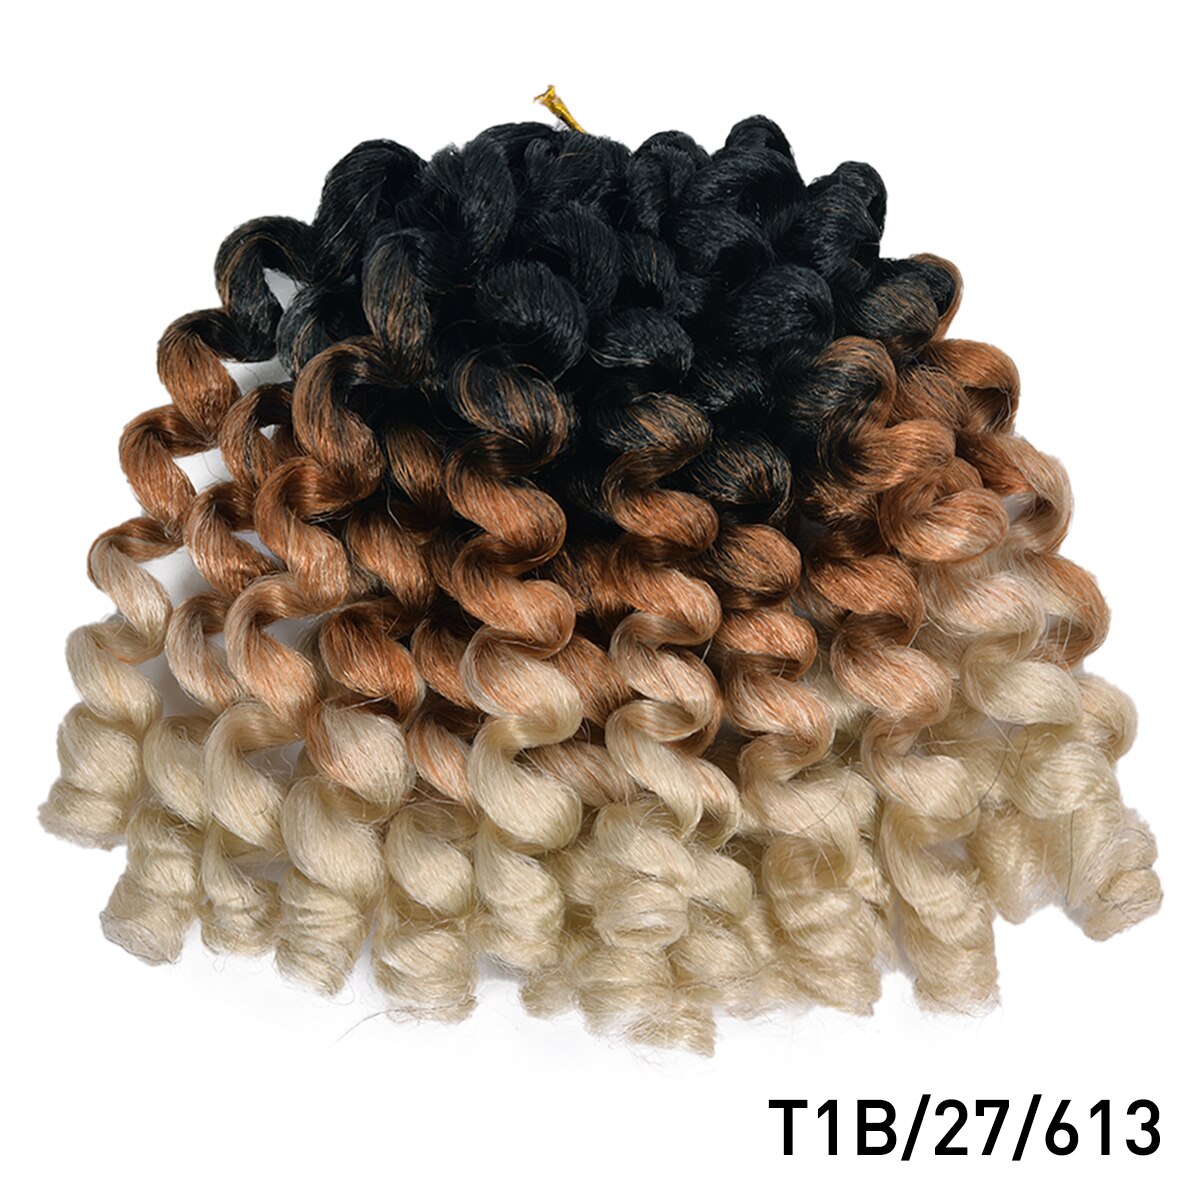 Trish Jumpy Wand Curl Crochet Hair